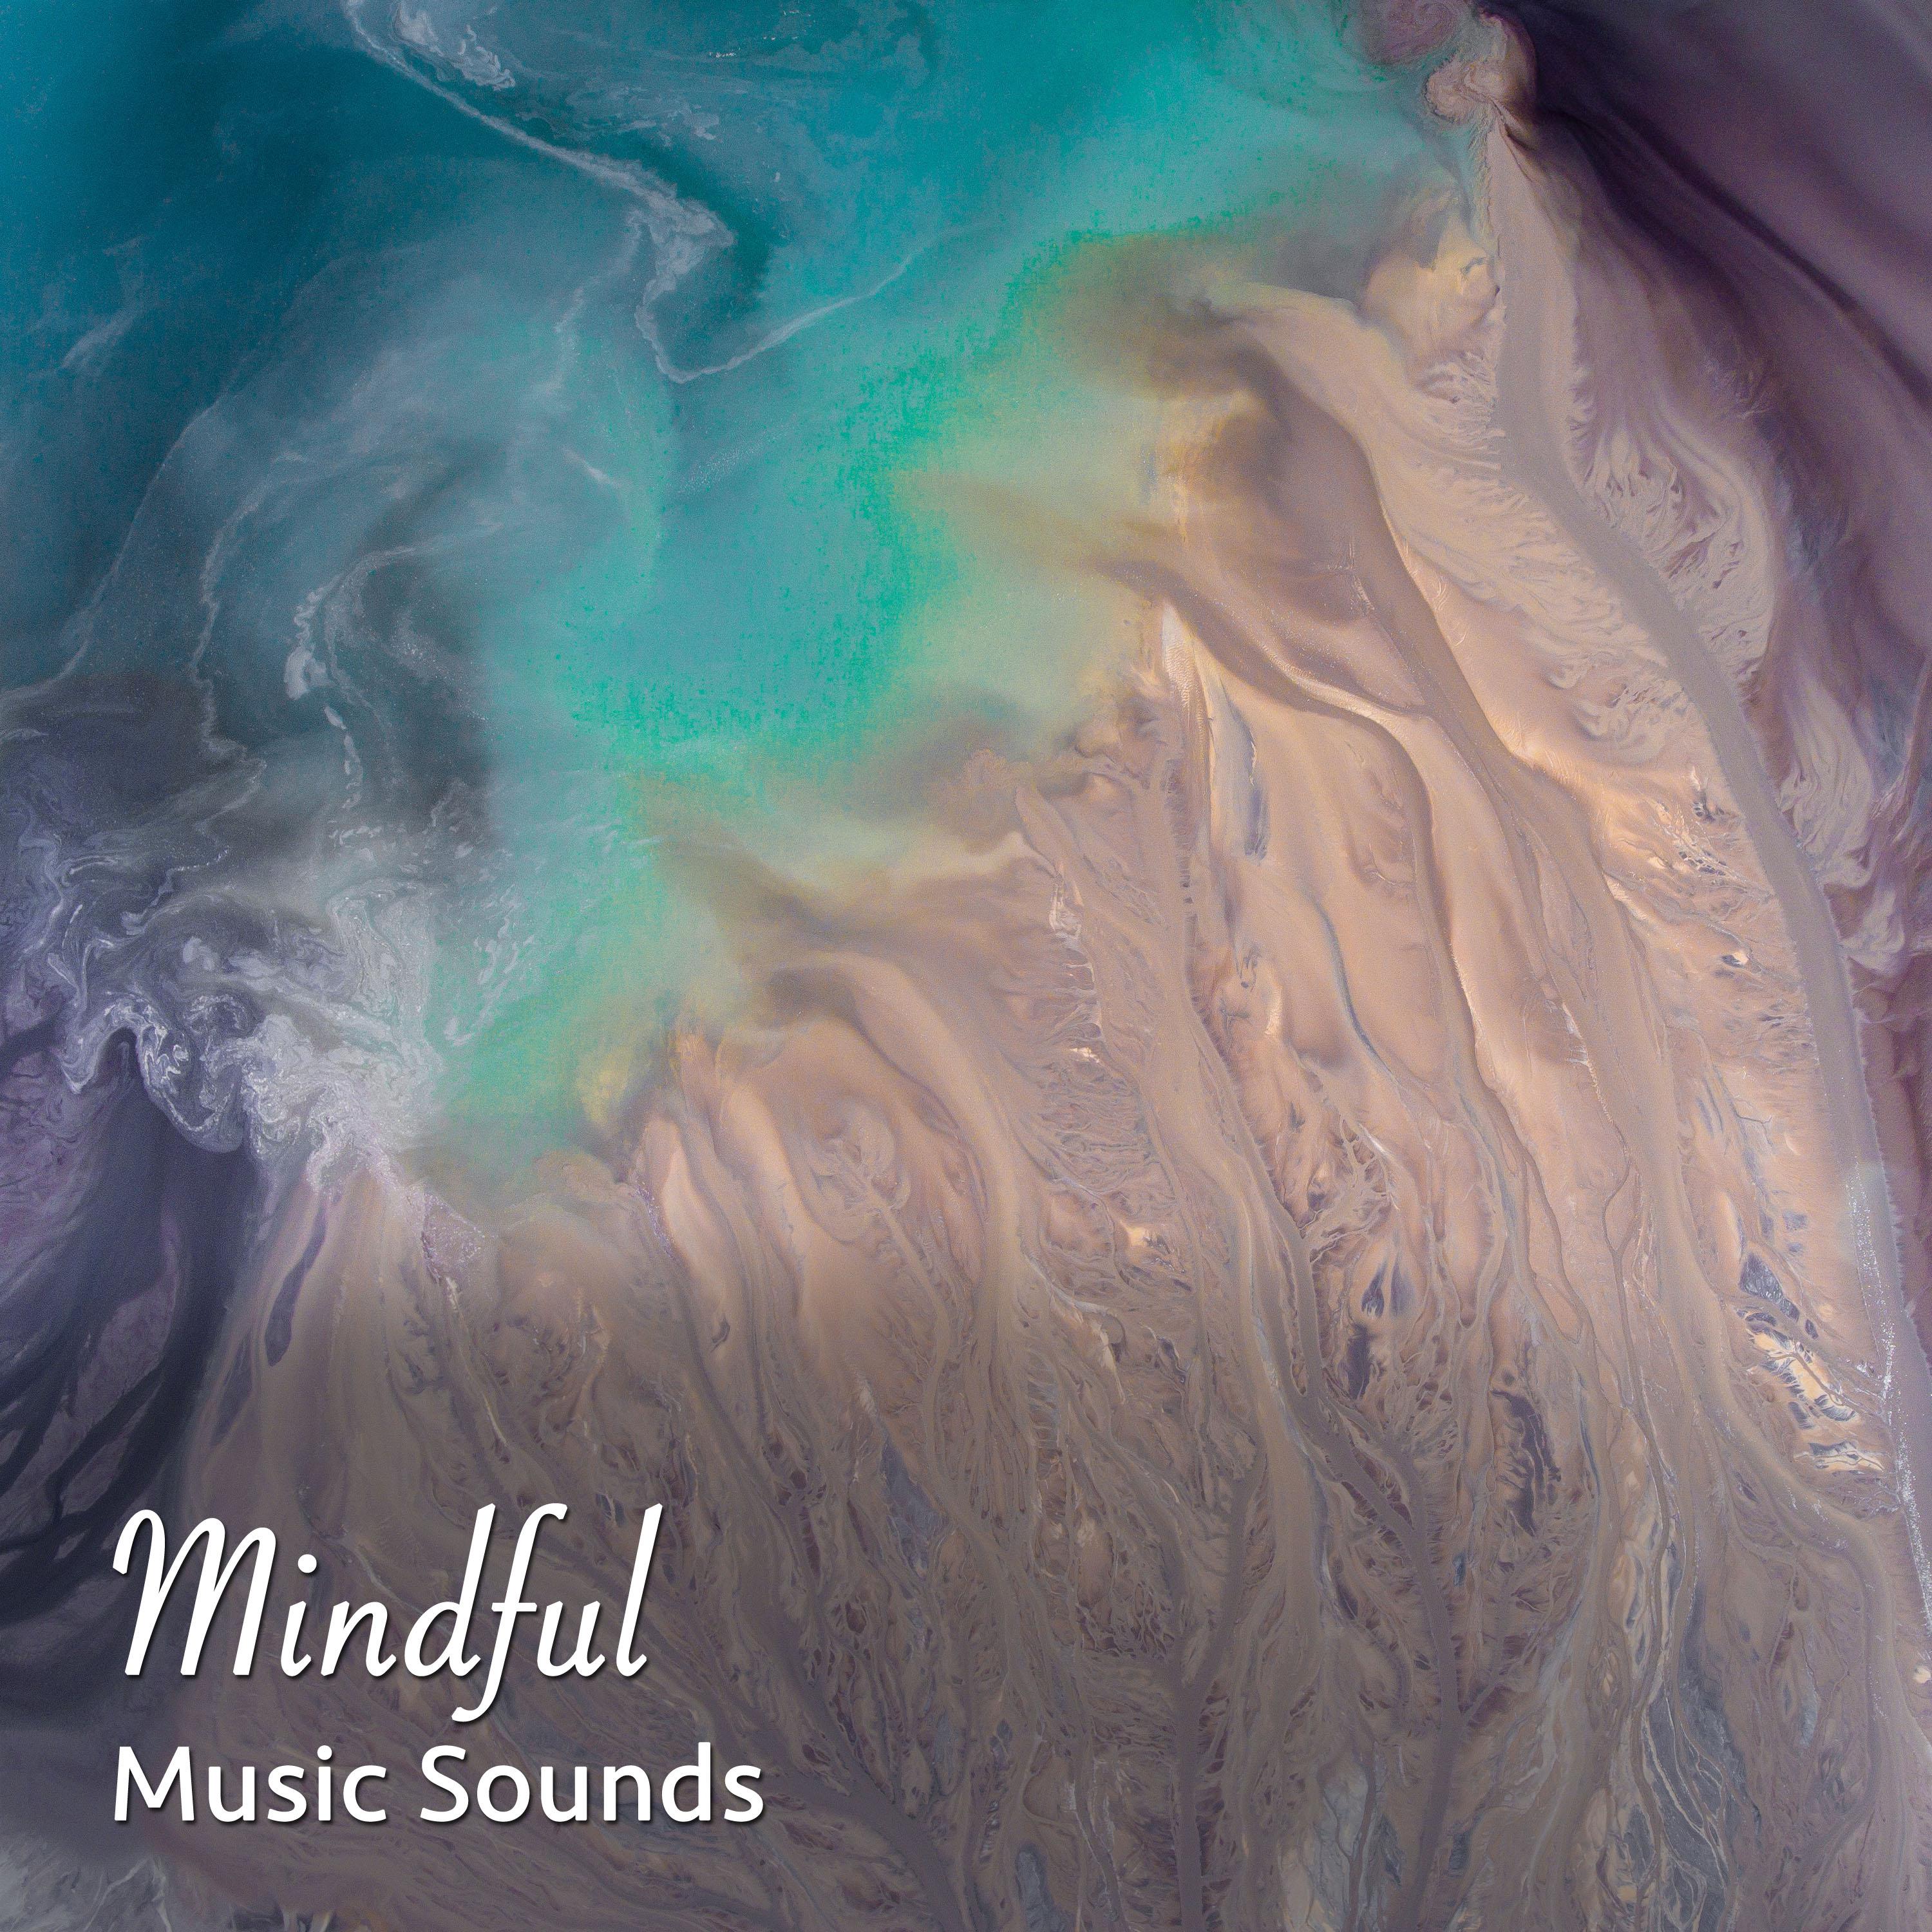 #2019 Mindful Music Sounds to Aid Wellness & Chakras